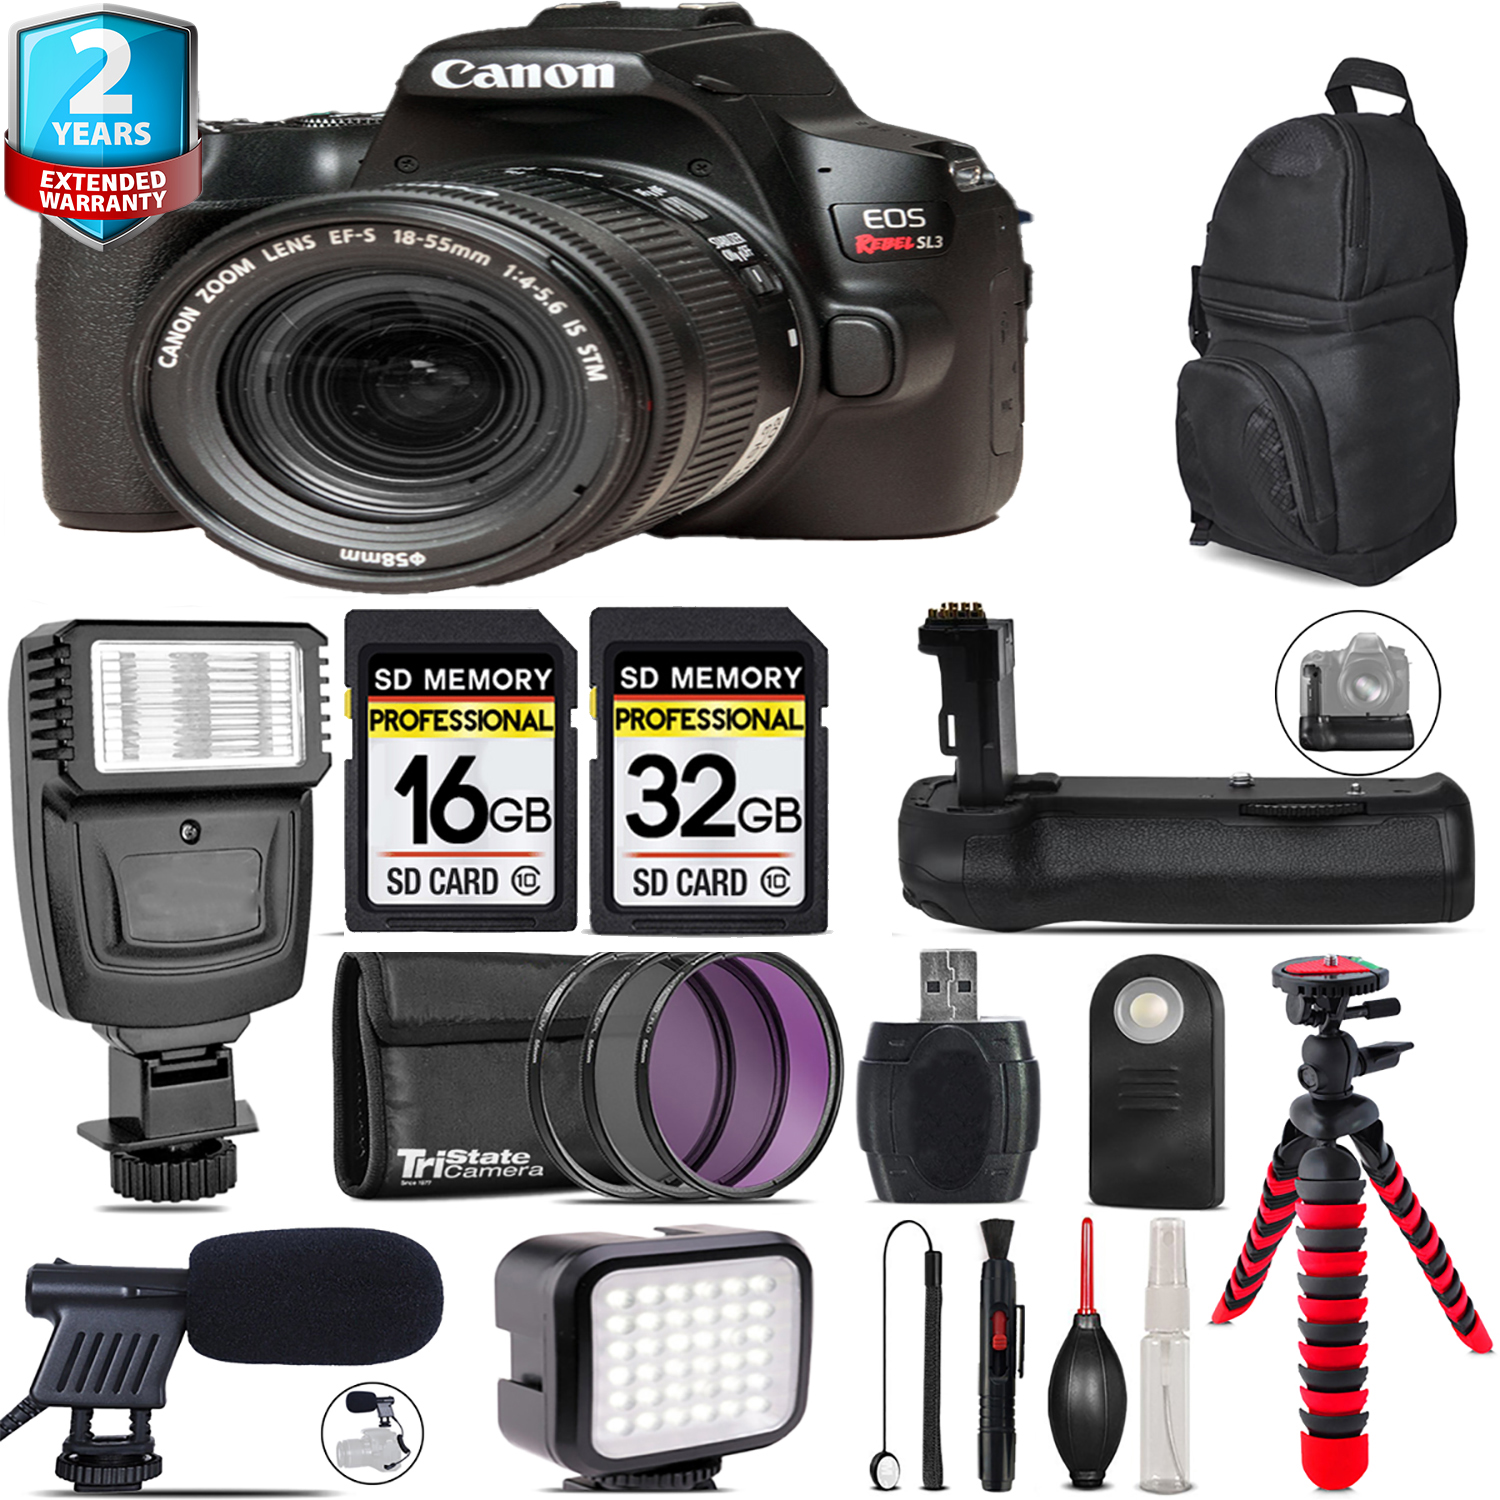 EOS Rebel SL3 Camera (Black) + 18-55mm IS STM + LED Kit + Mic + 48GB *FREE SHIPPING*